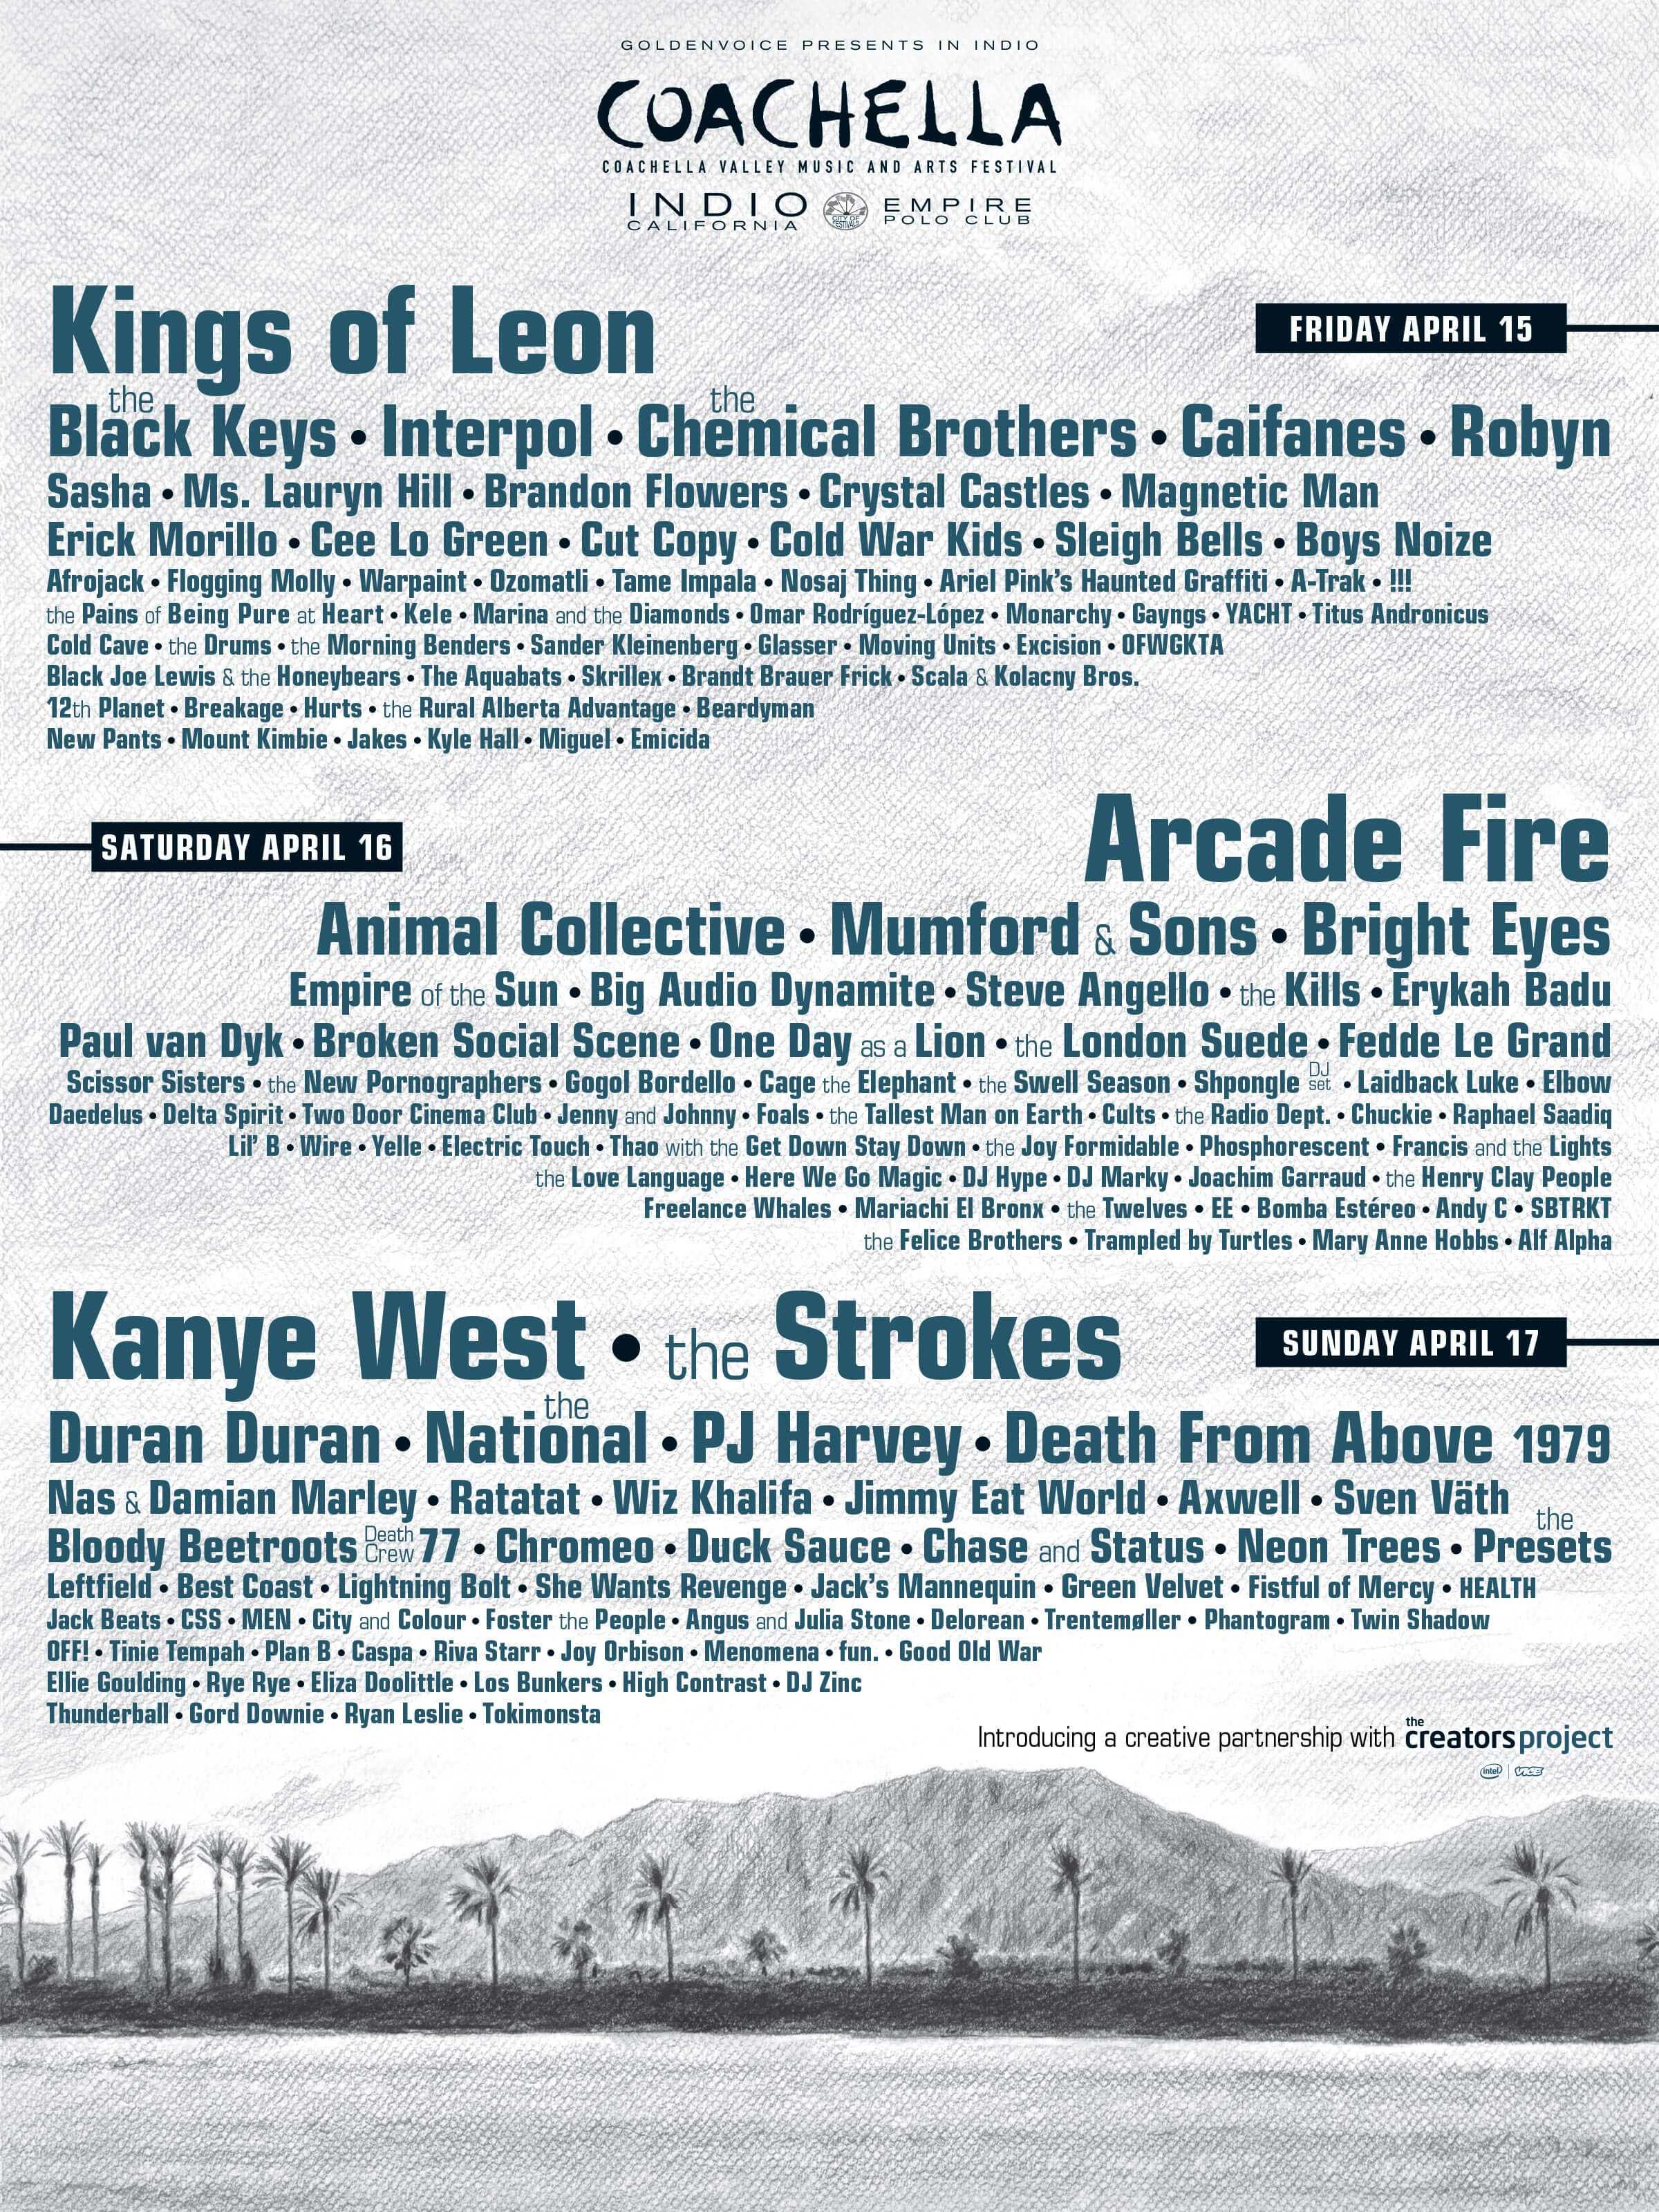 Coachella 2011 Lineup Poster